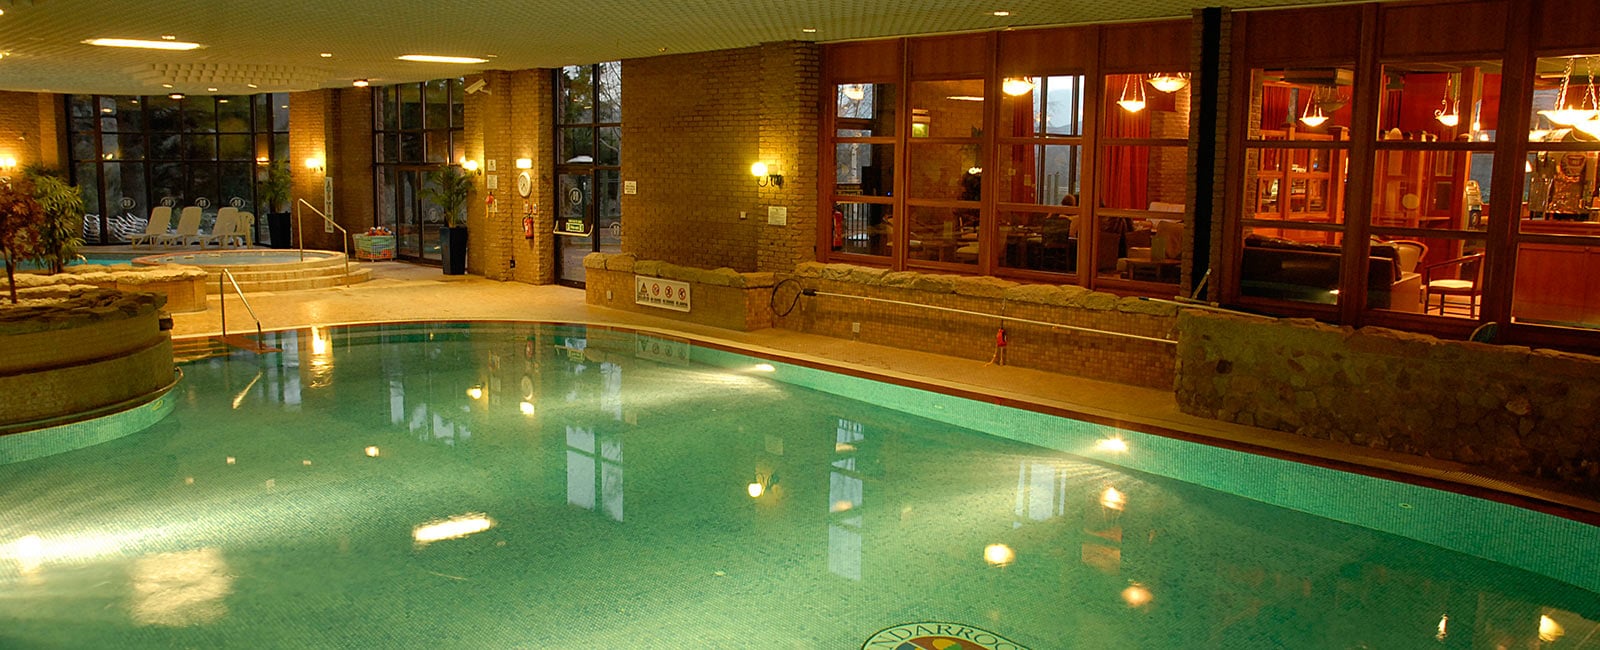 Indoor Pool at Hilton Grand Vacations Club at Craigendarroch Lodges in Royal Deeside, Scotland